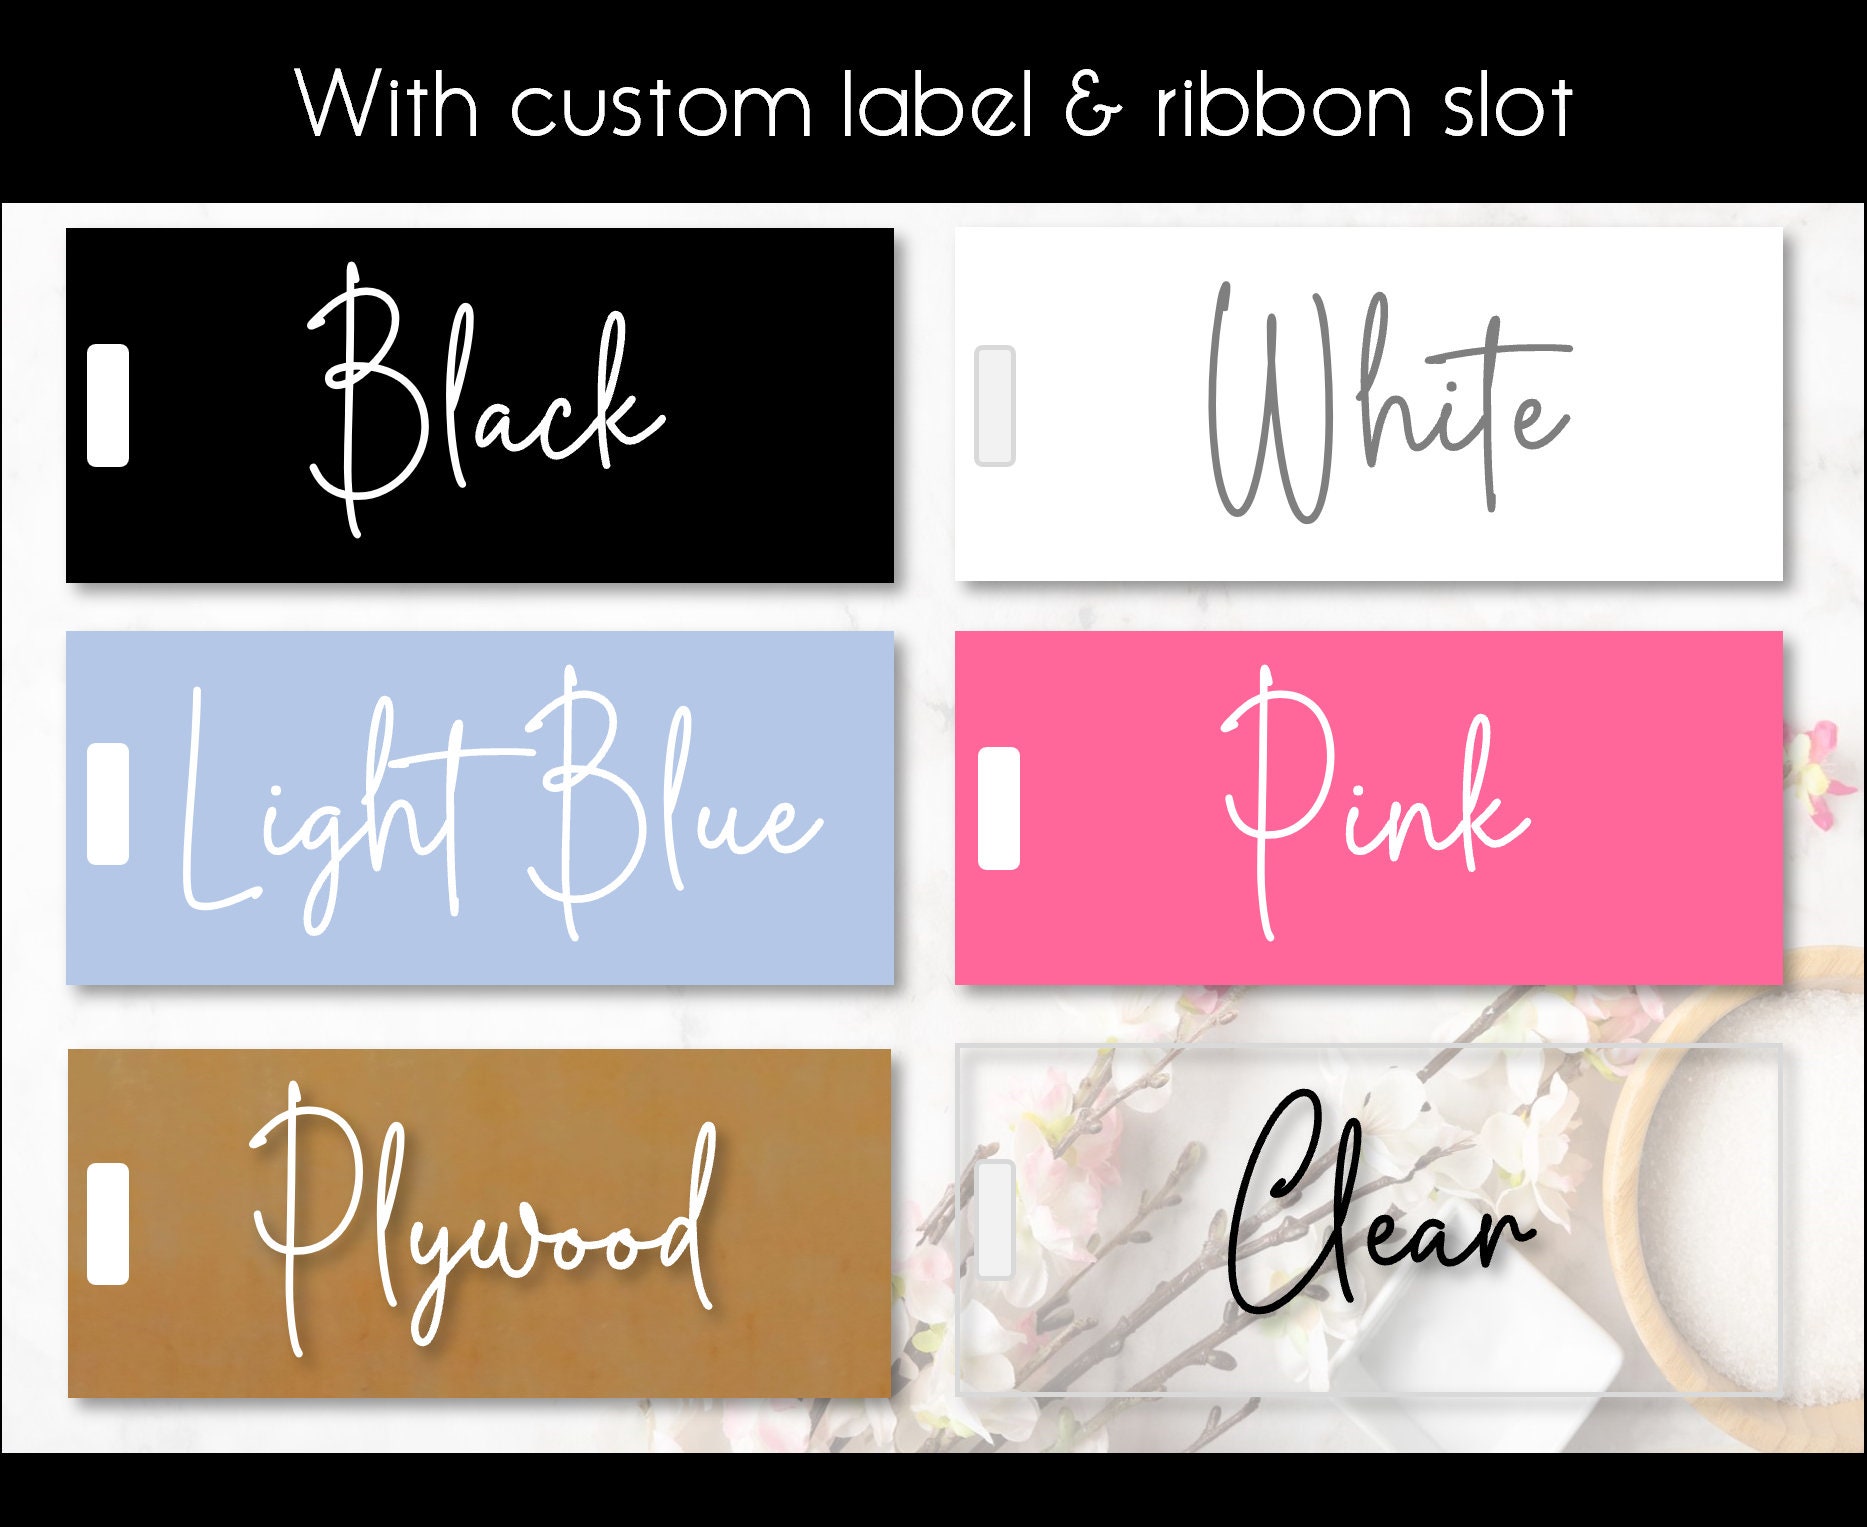 Acrylic Basket Swing Tag With Ribbon Slot & Custom Label